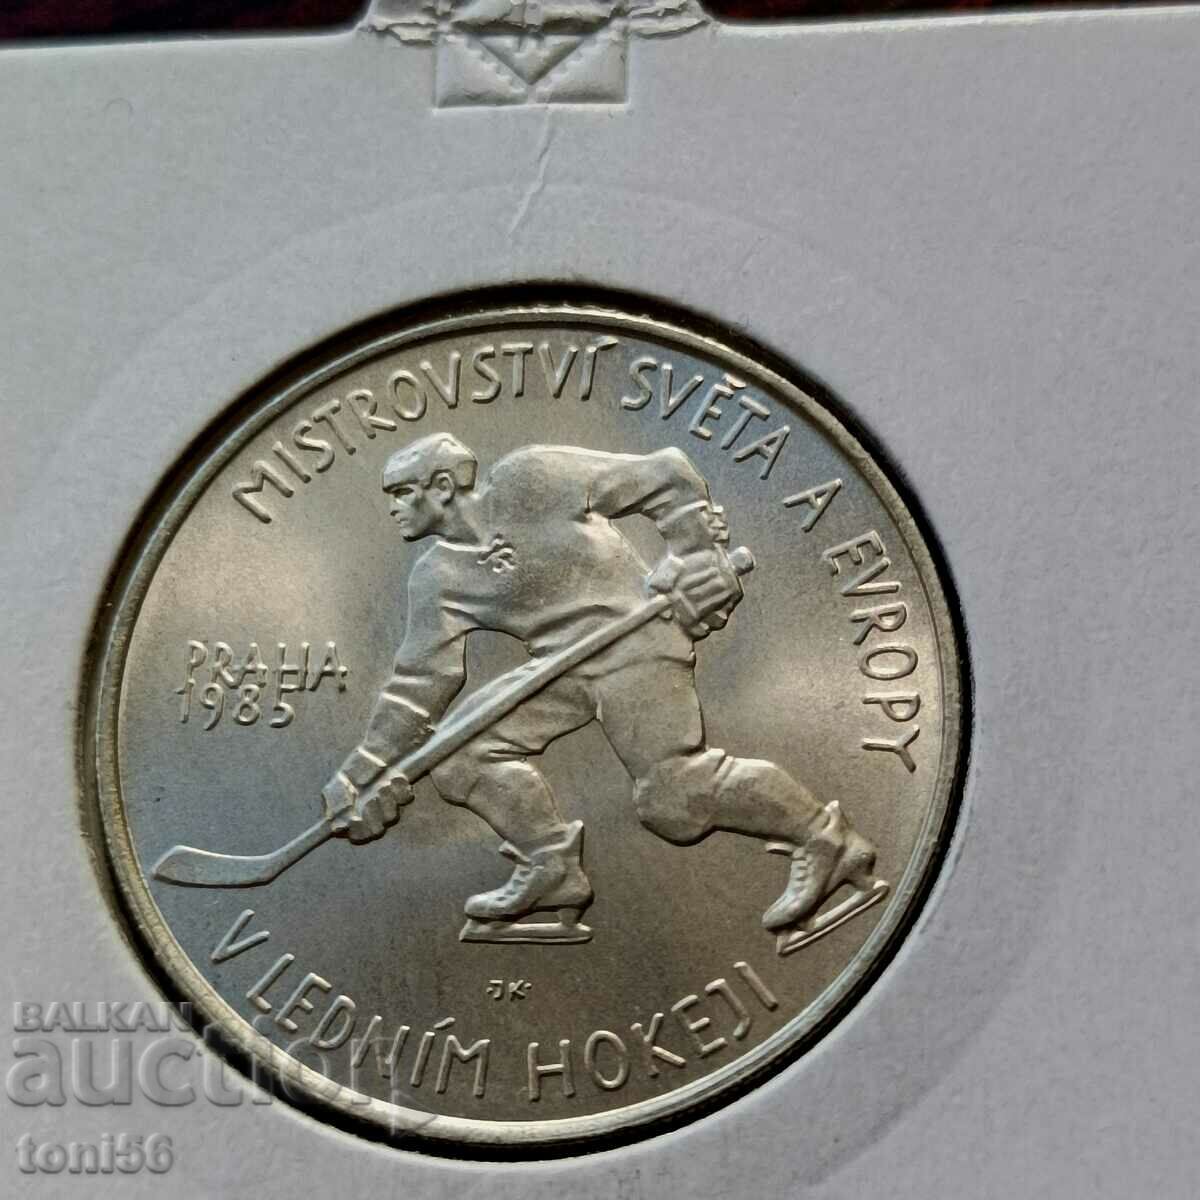 Cehoslovacia 100 de coroane 1985 UNC - Hochei argint